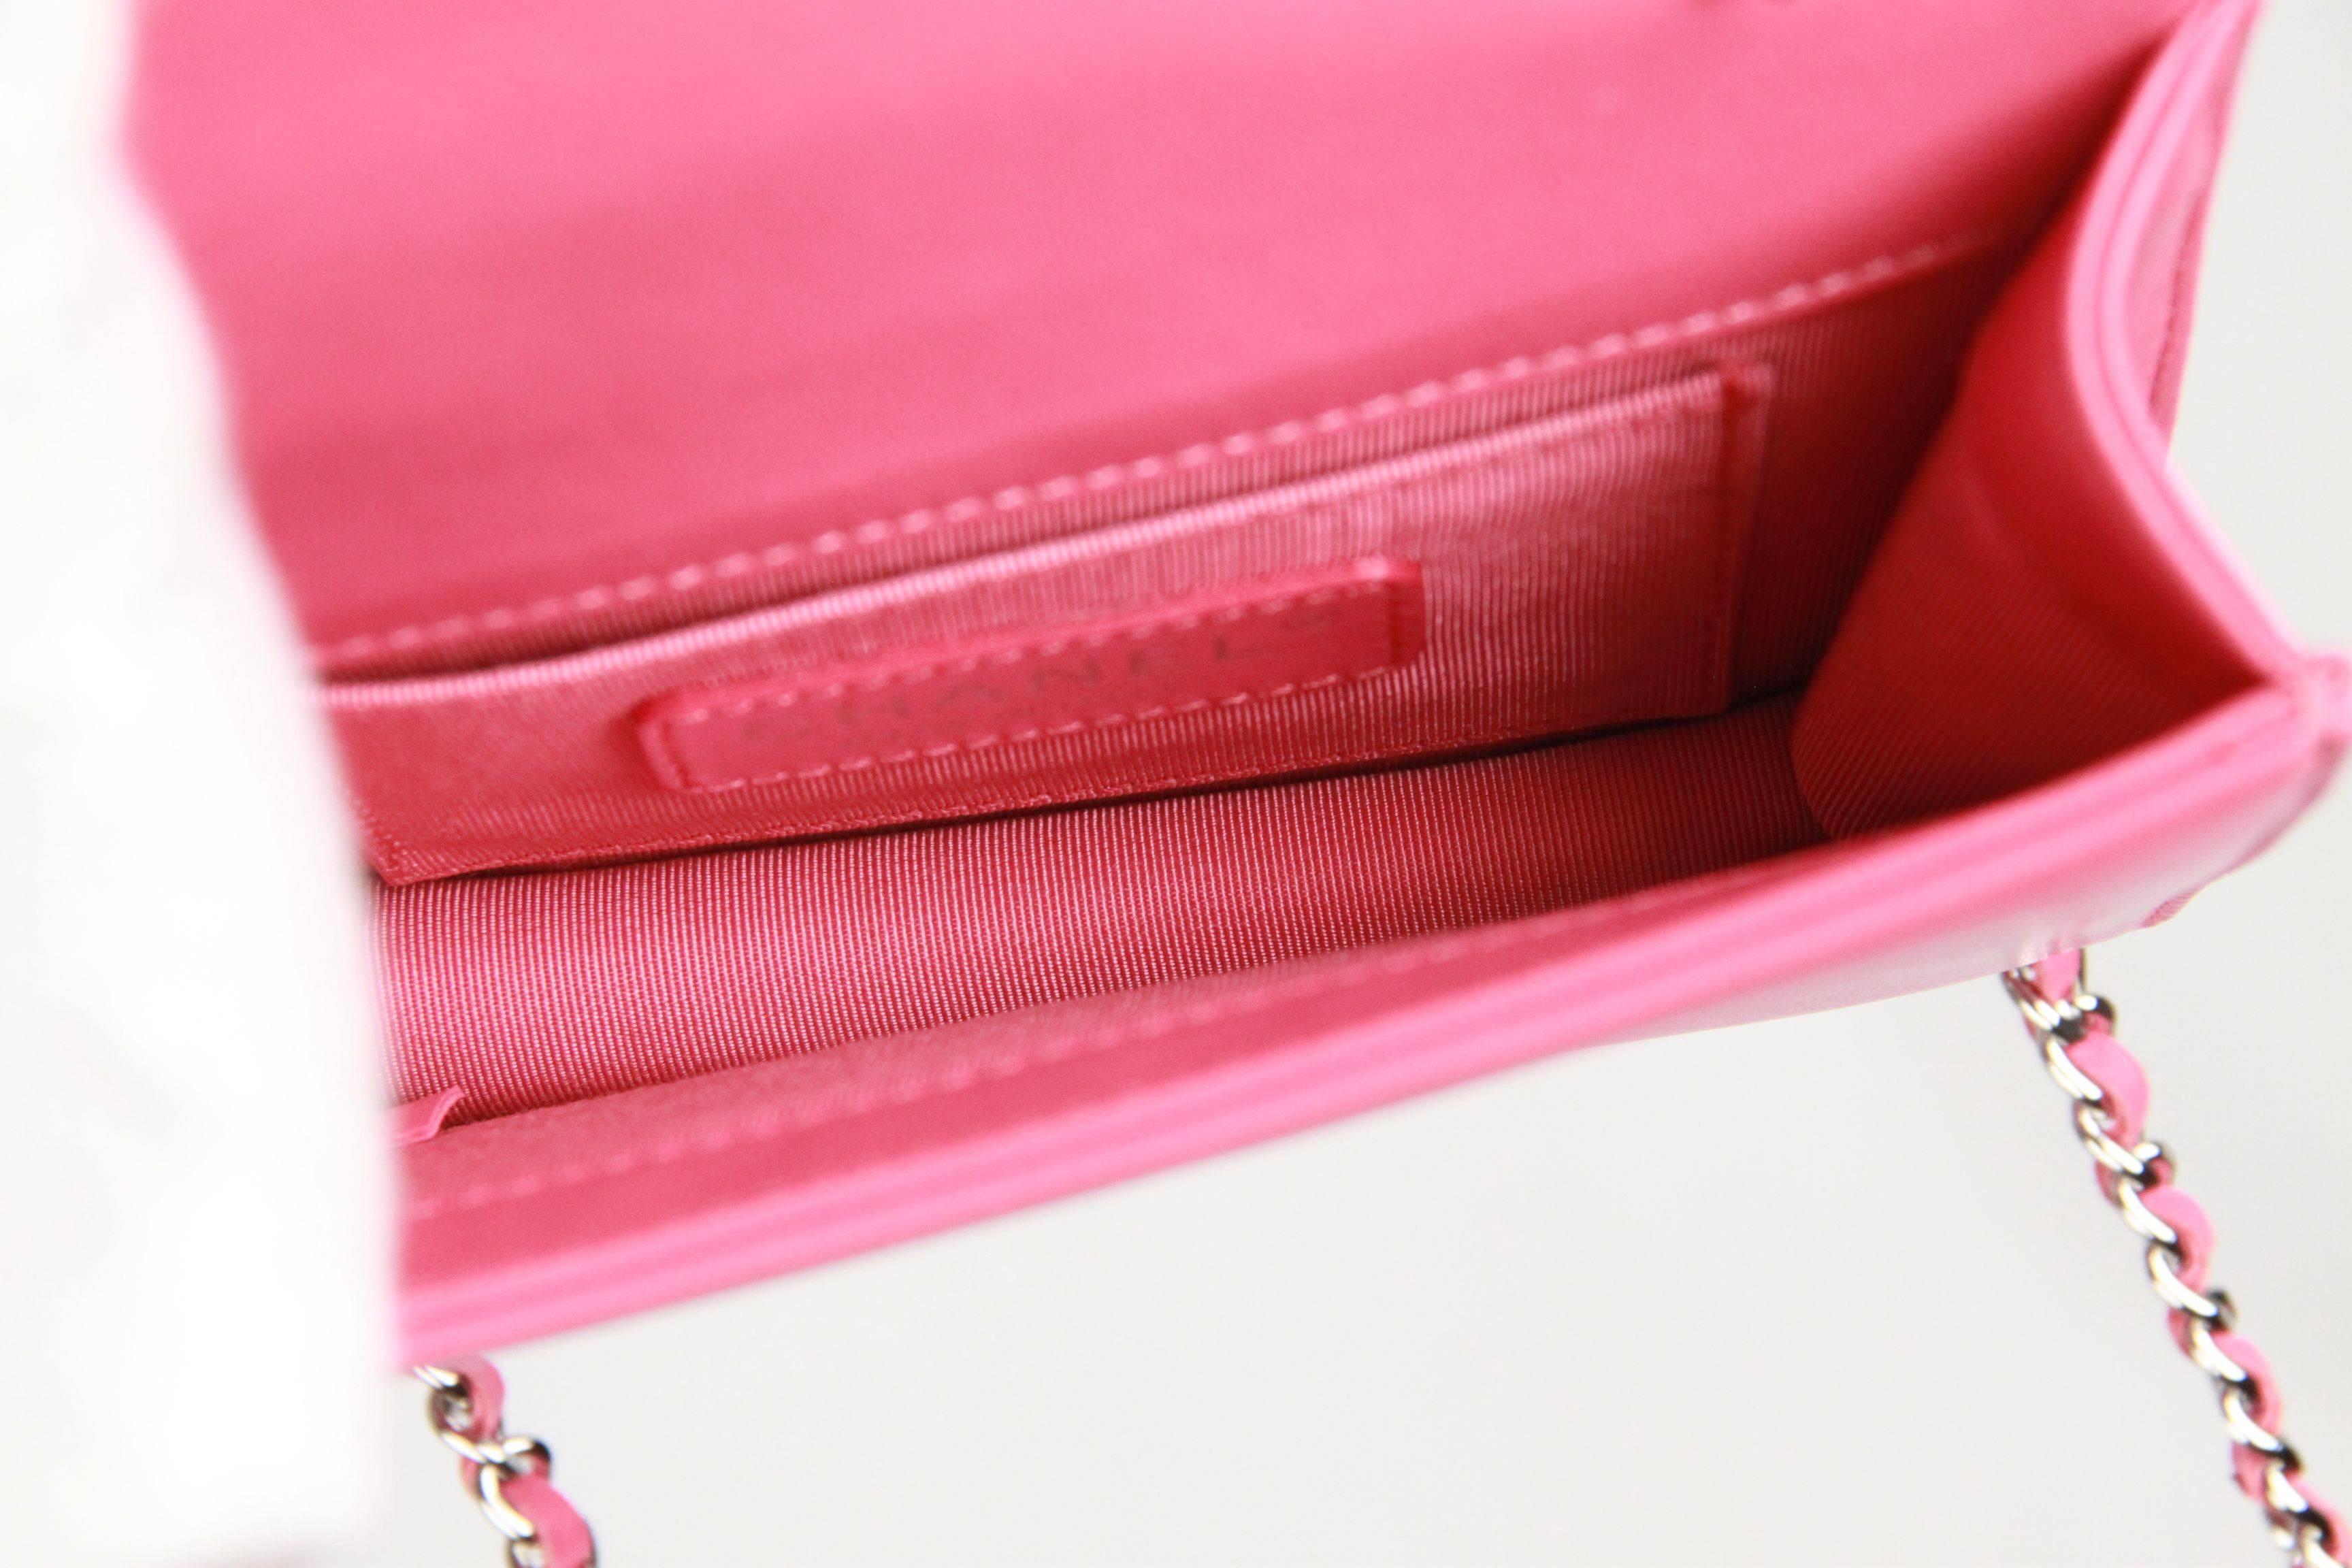 CHANEL Pink Patent Leather OMBRE BLOCK LOGO Mini CROSSBODY BAG Ltd Ed 2